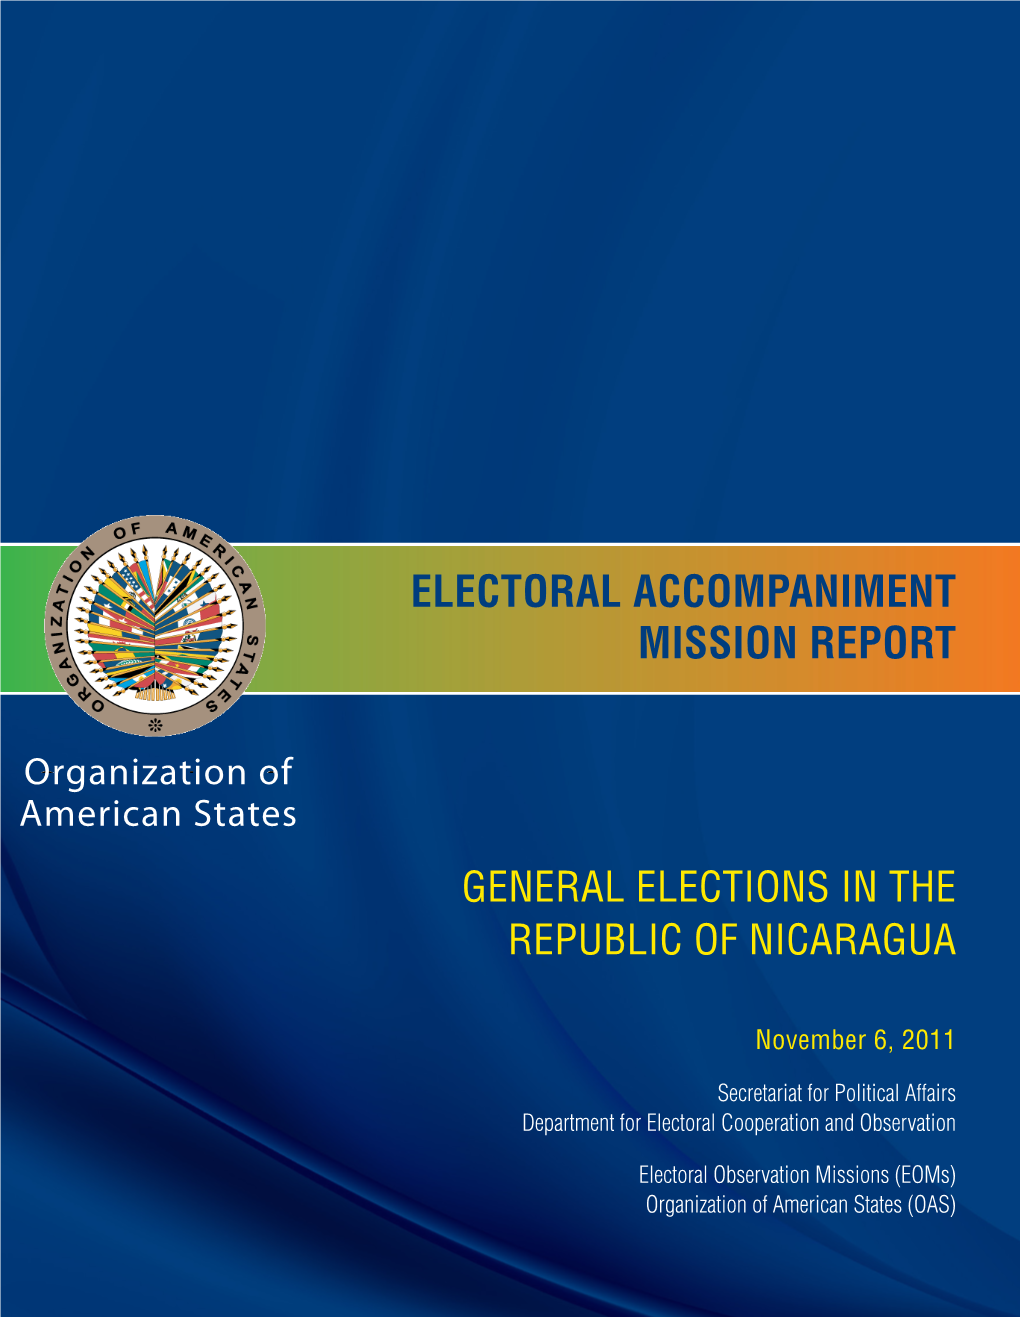 Electoral Accompaniment Mission Report